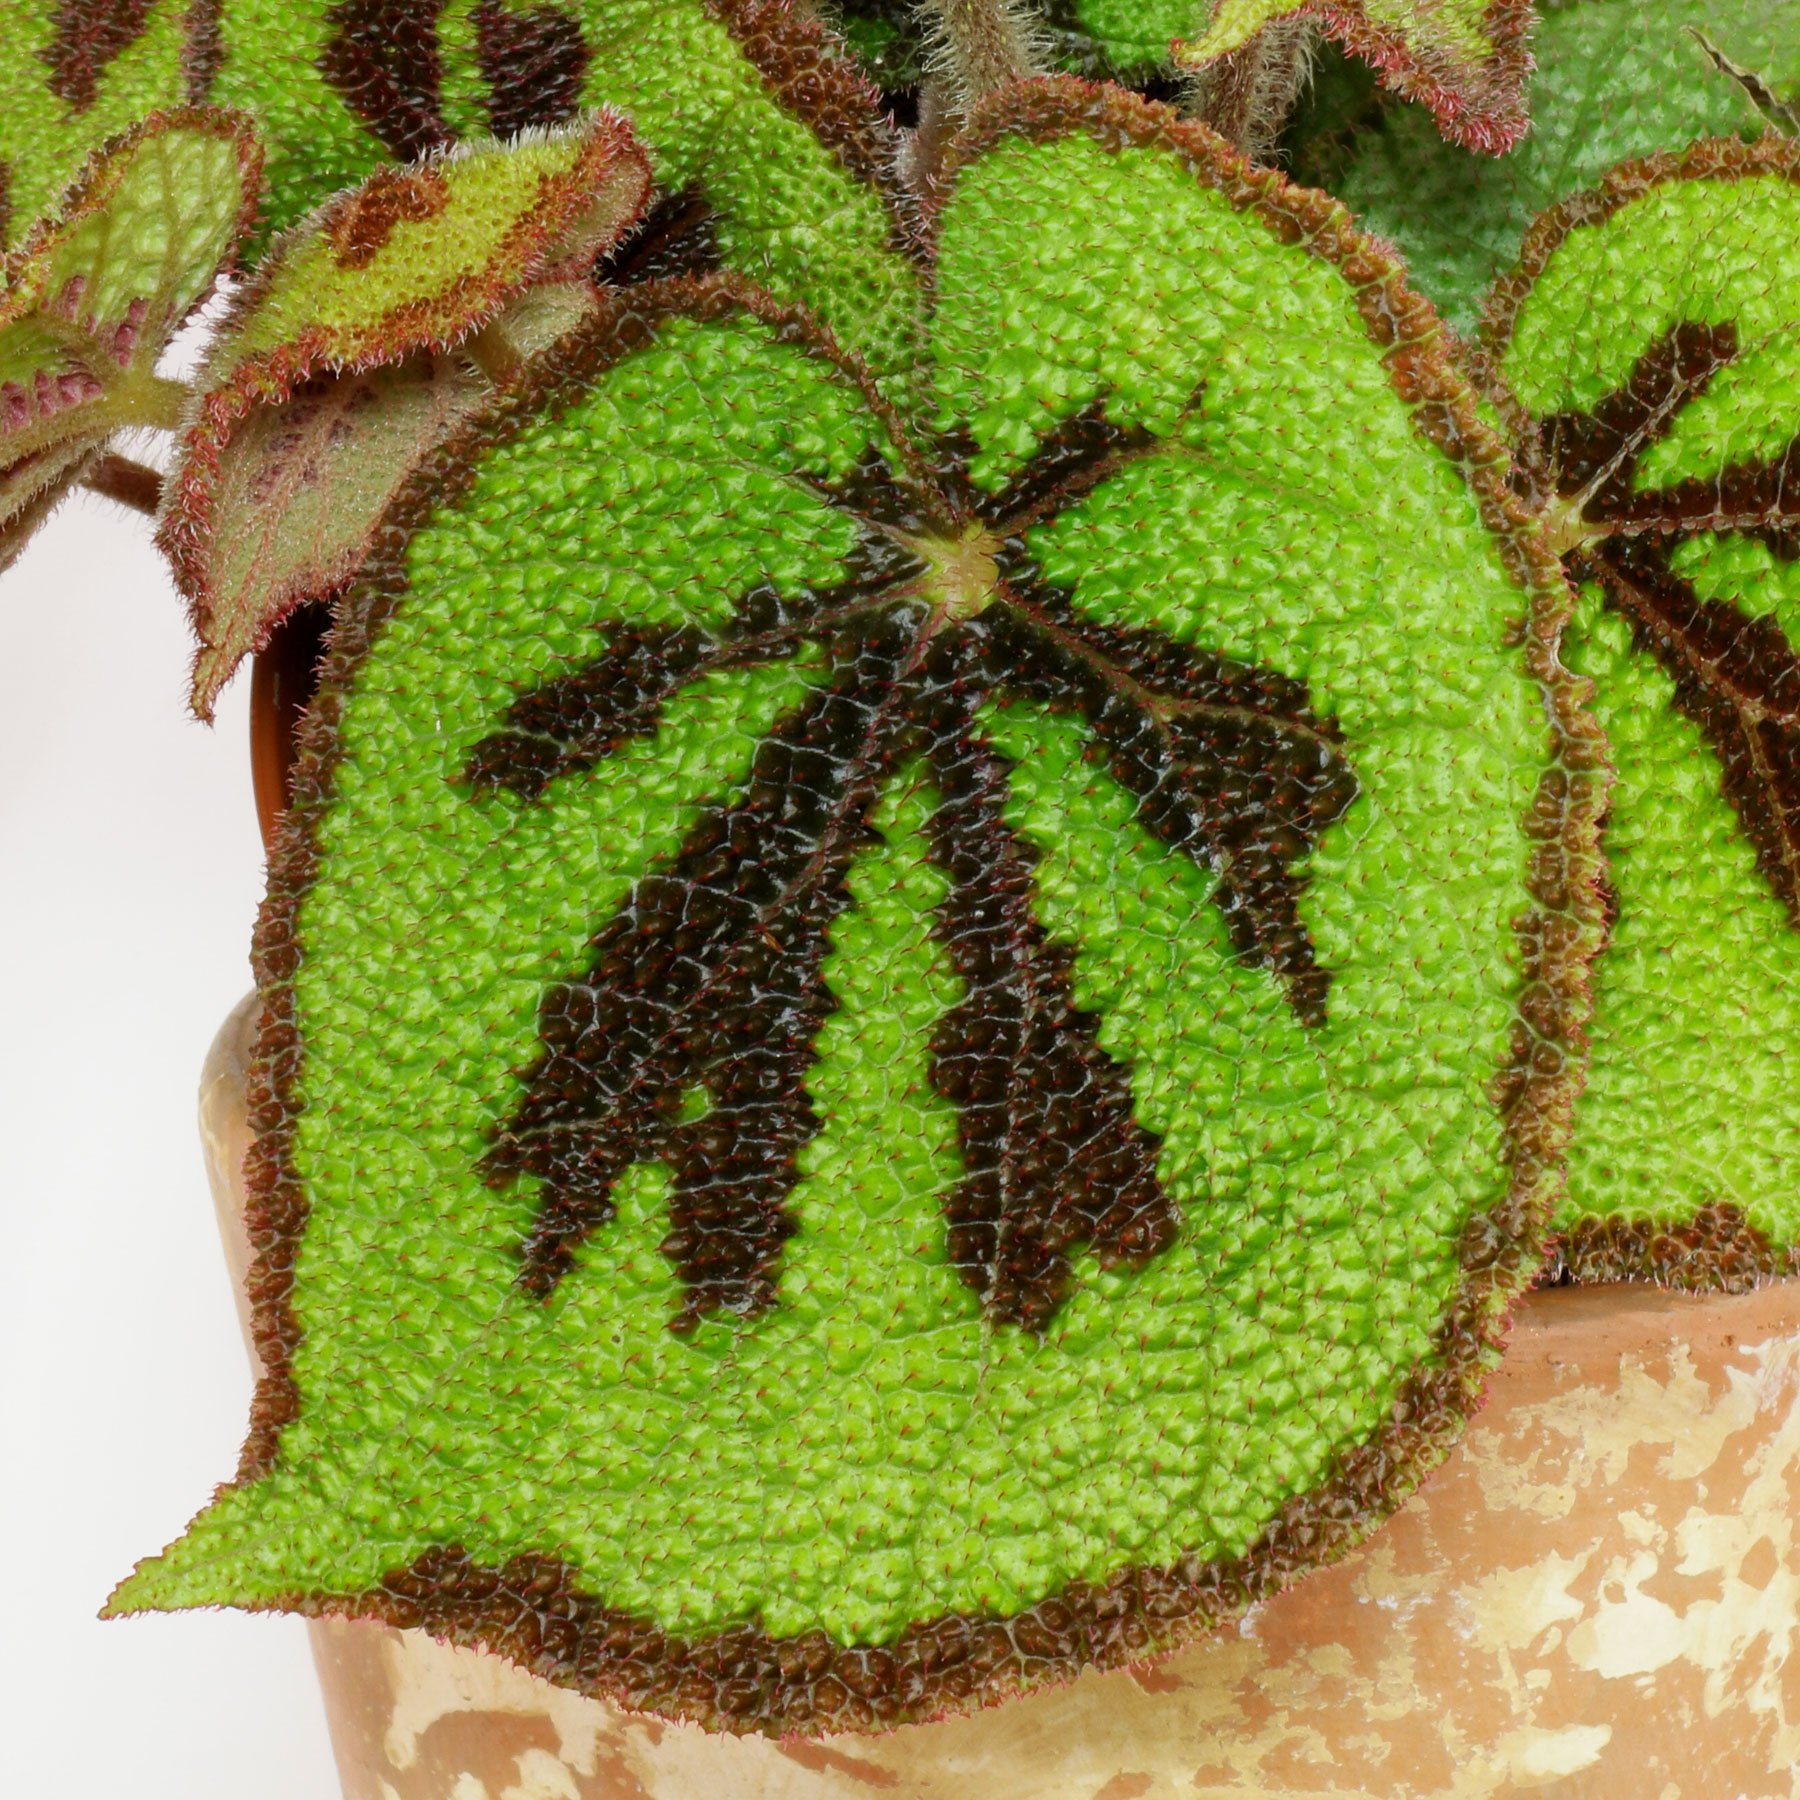 Begonia masoniana